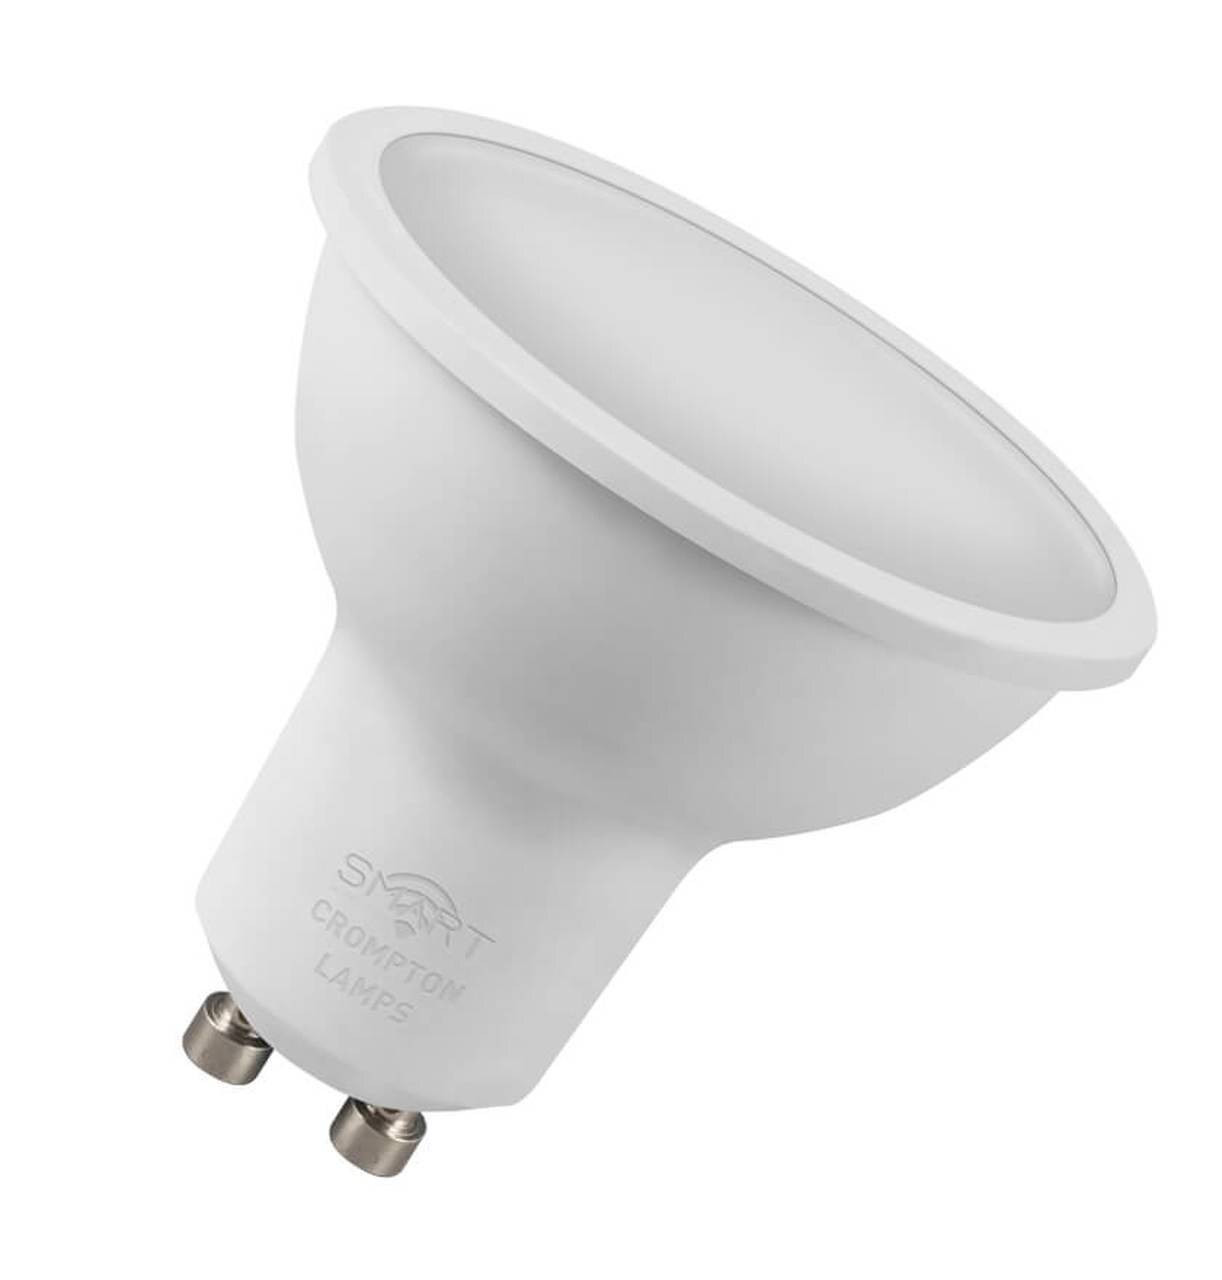 MoKo Smart WiFi LED Spot Light Bulb 5W GU10 Dimmable Spotlight RGB